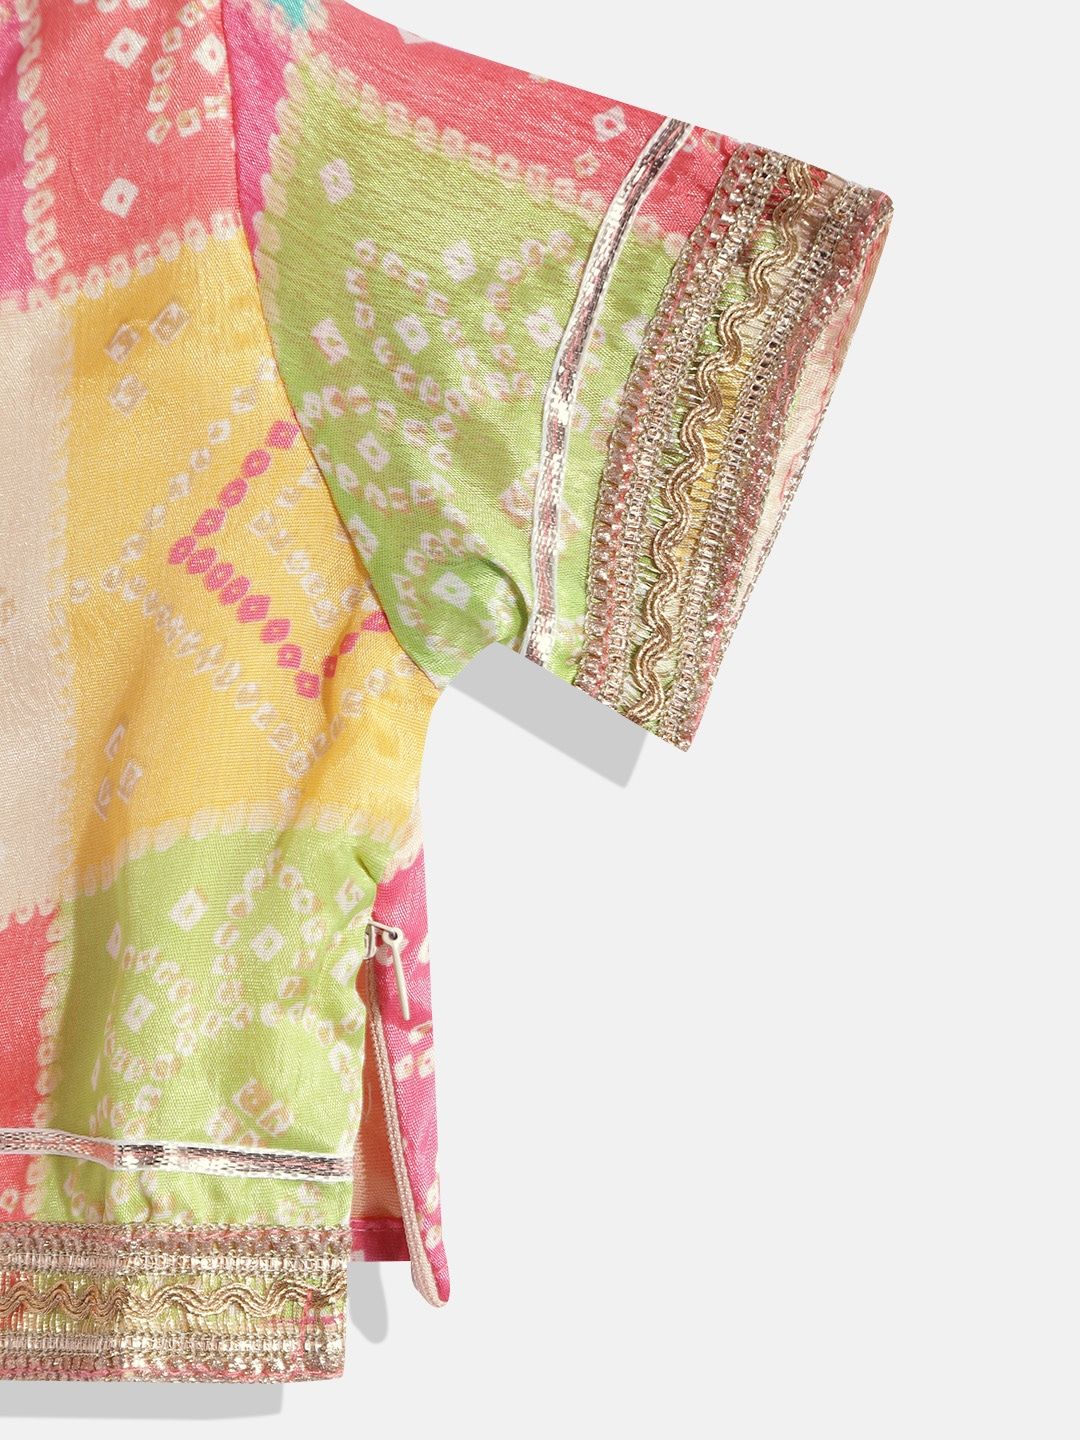 Straight Style Pink Color Art Silk Fabric Choli And Lehenga With Dupatta